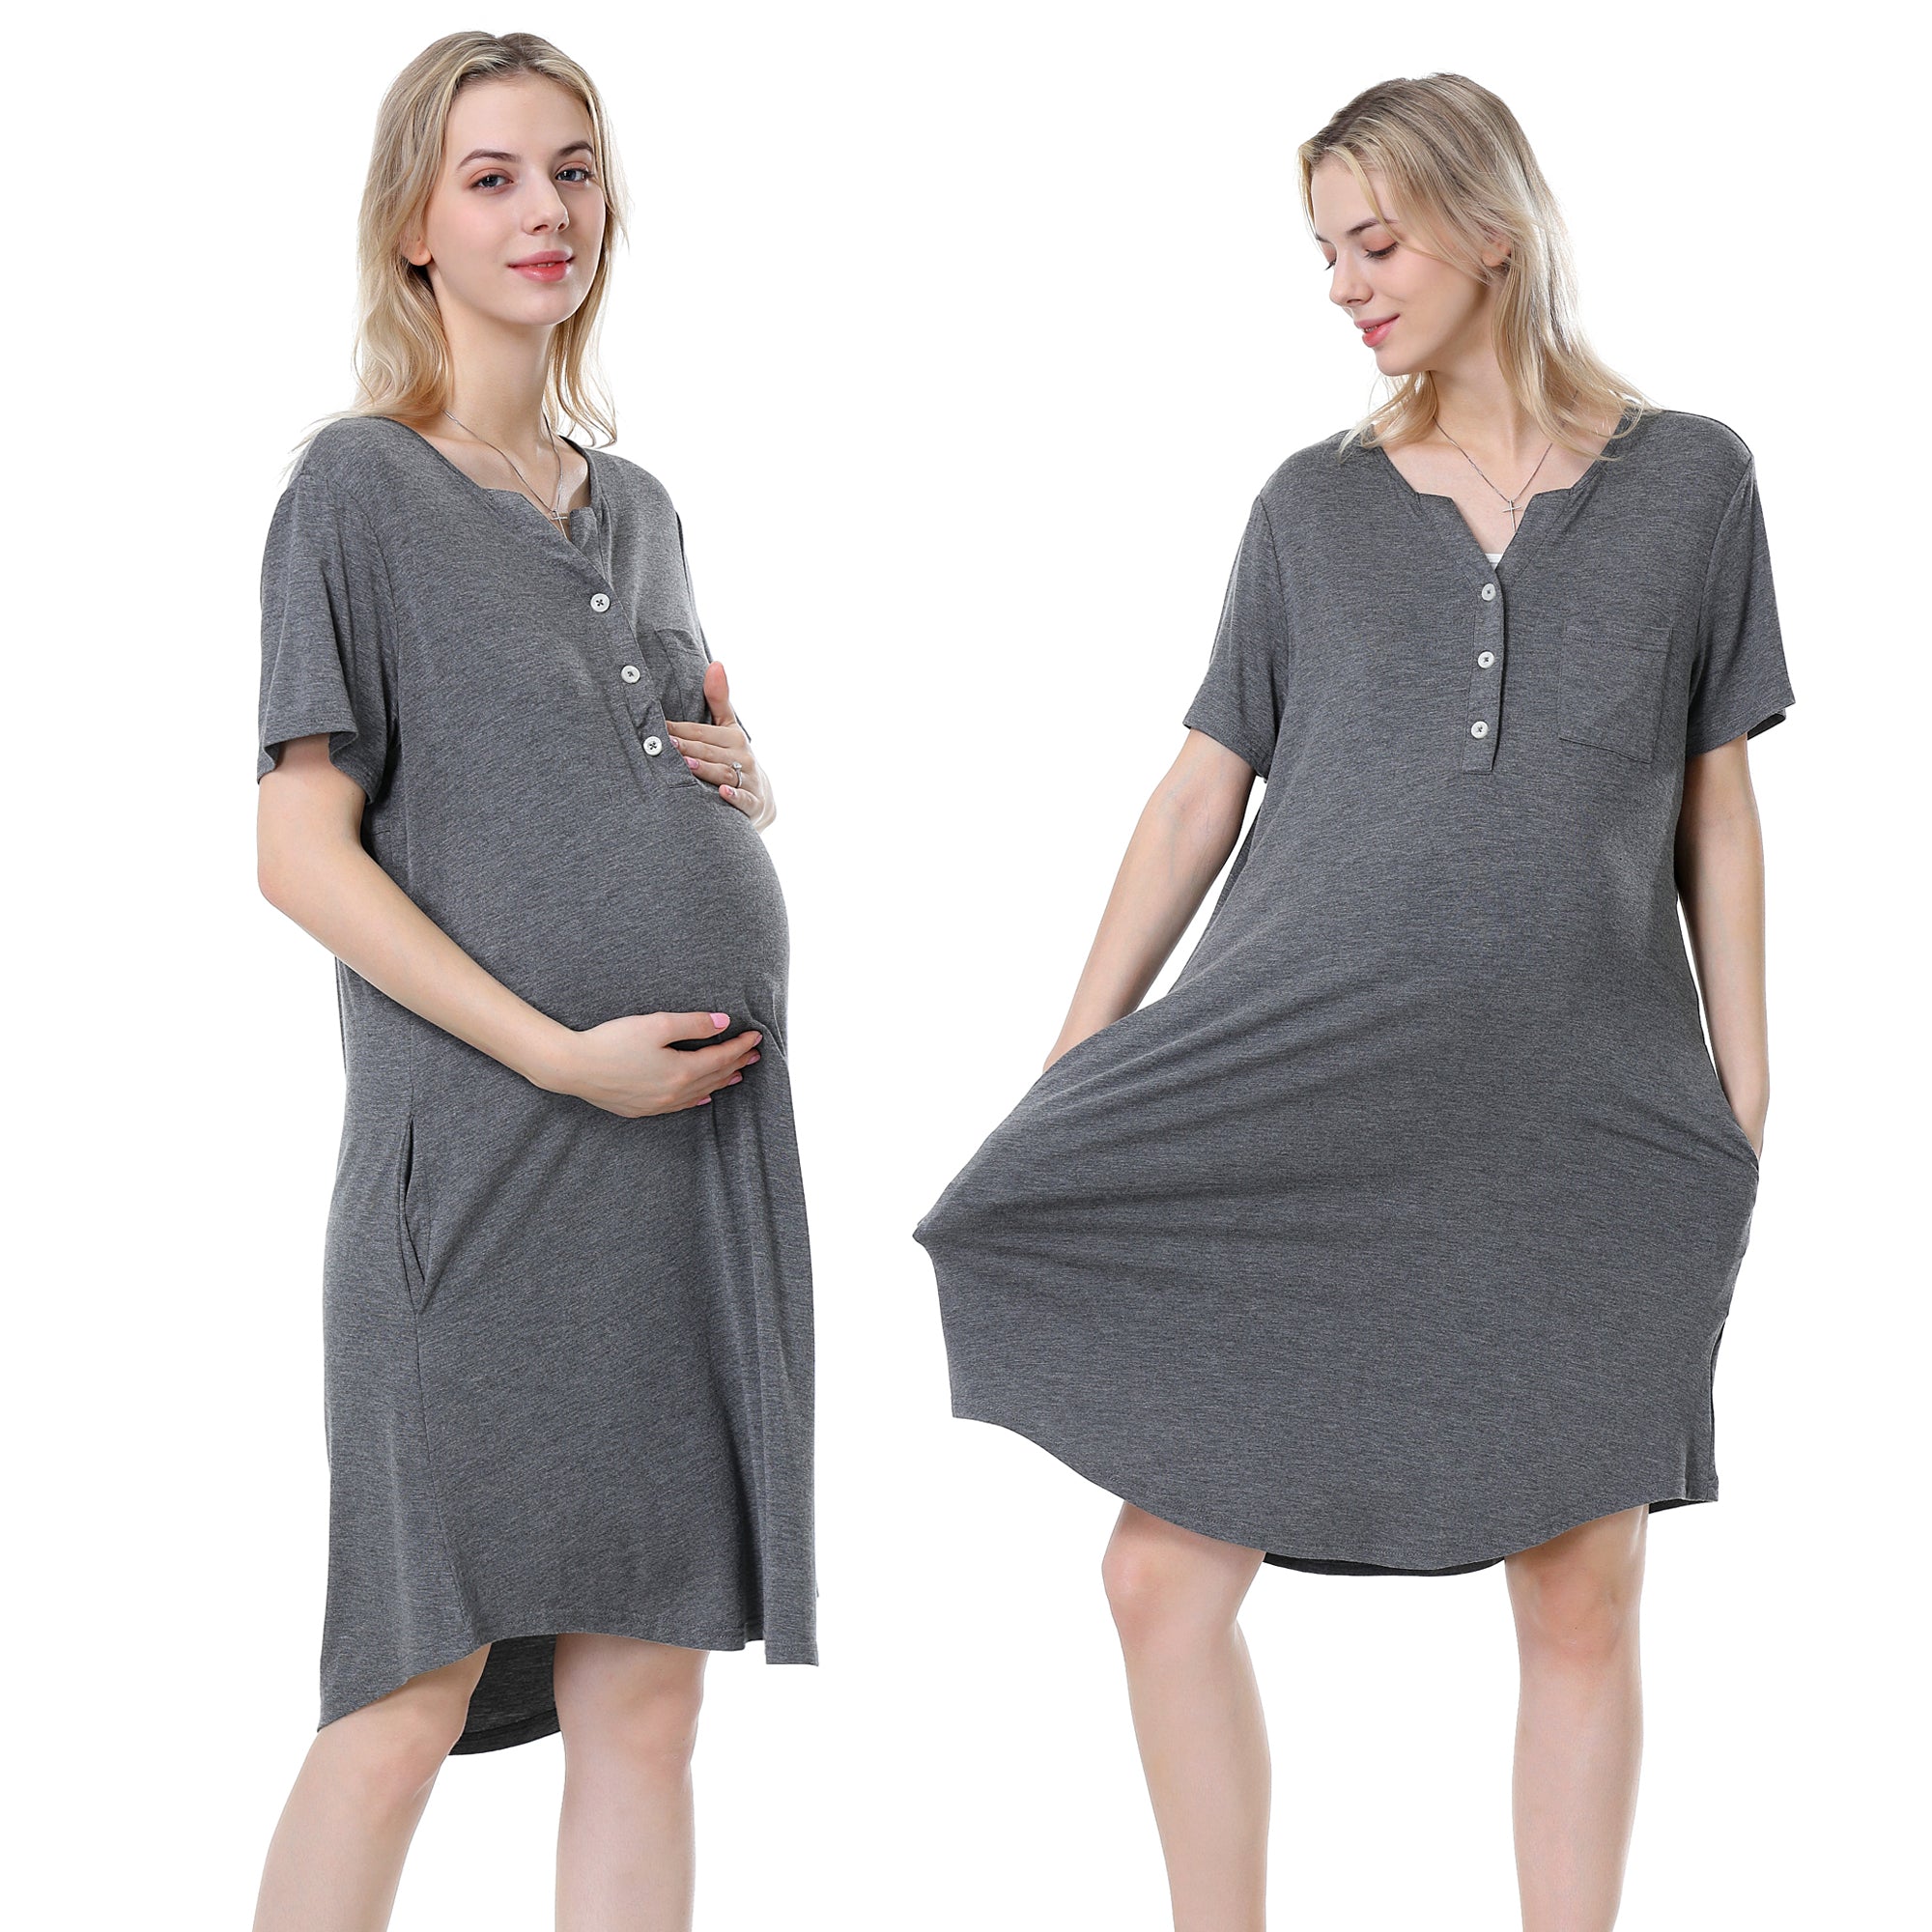 Loungeable Maternity fleece pajamas with half zip in gray cloud